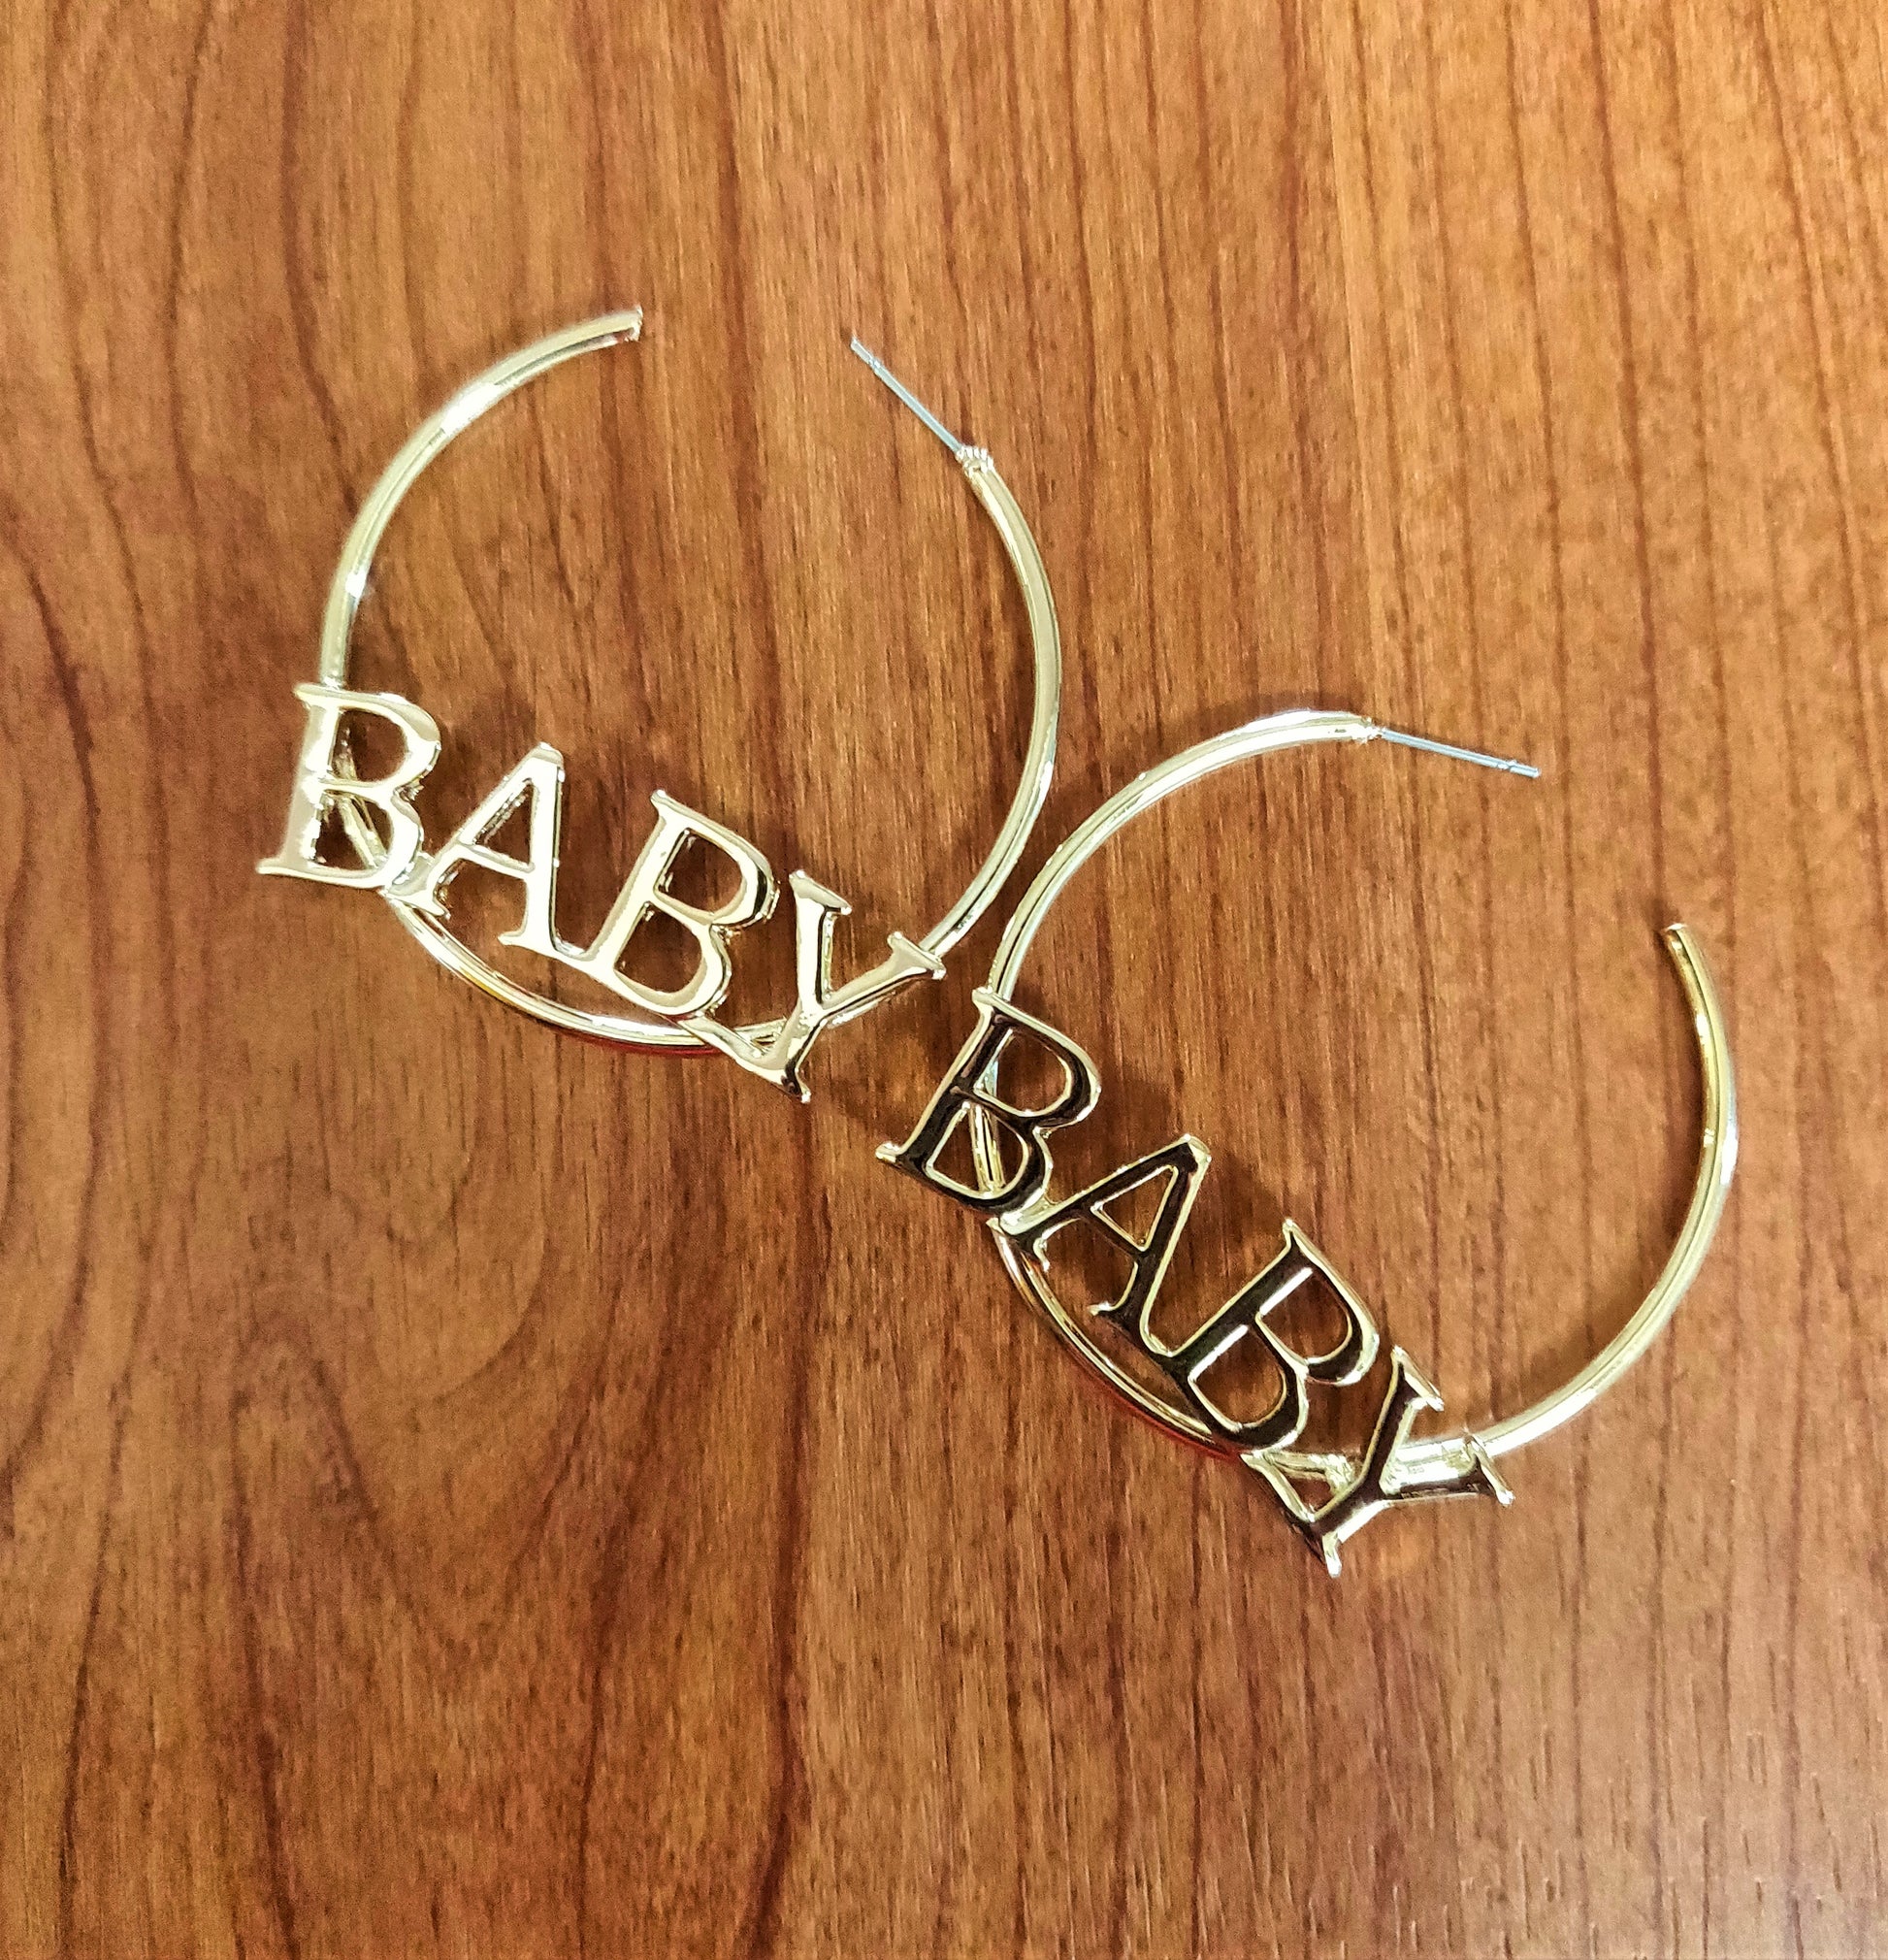 BABY Scripted Earring - GlitterGleam